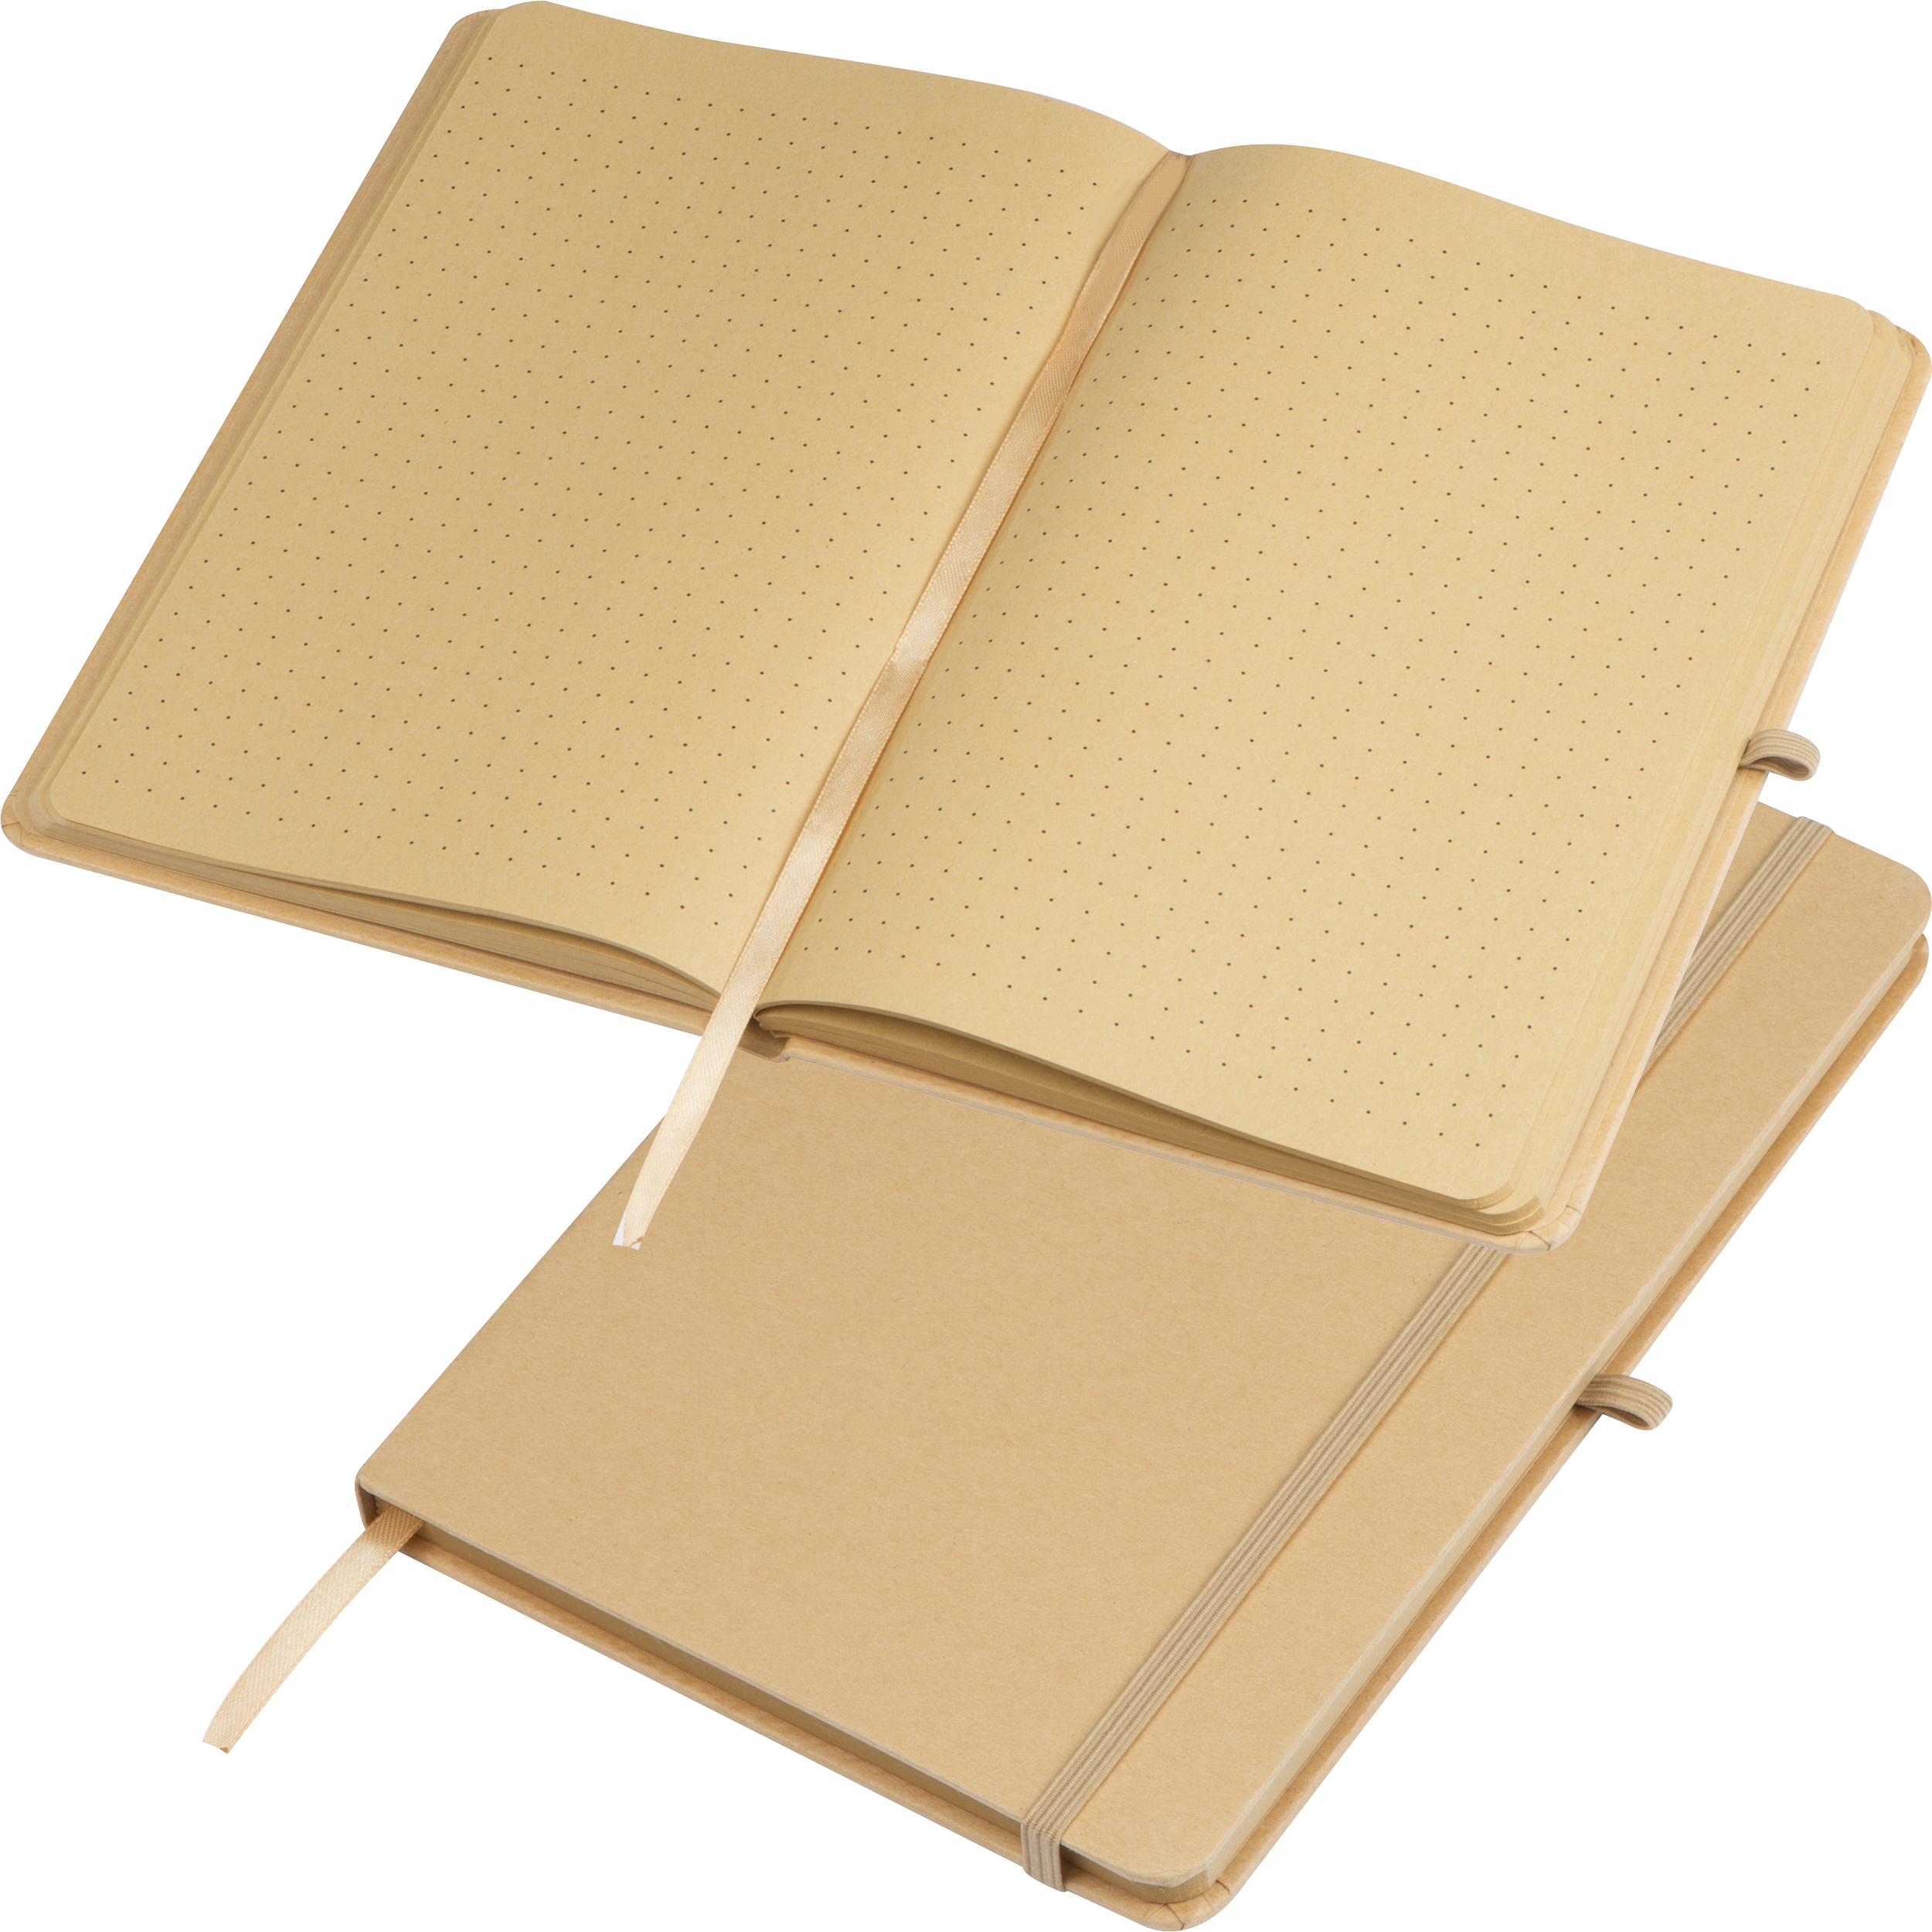 A5 Craft Paper Notebook